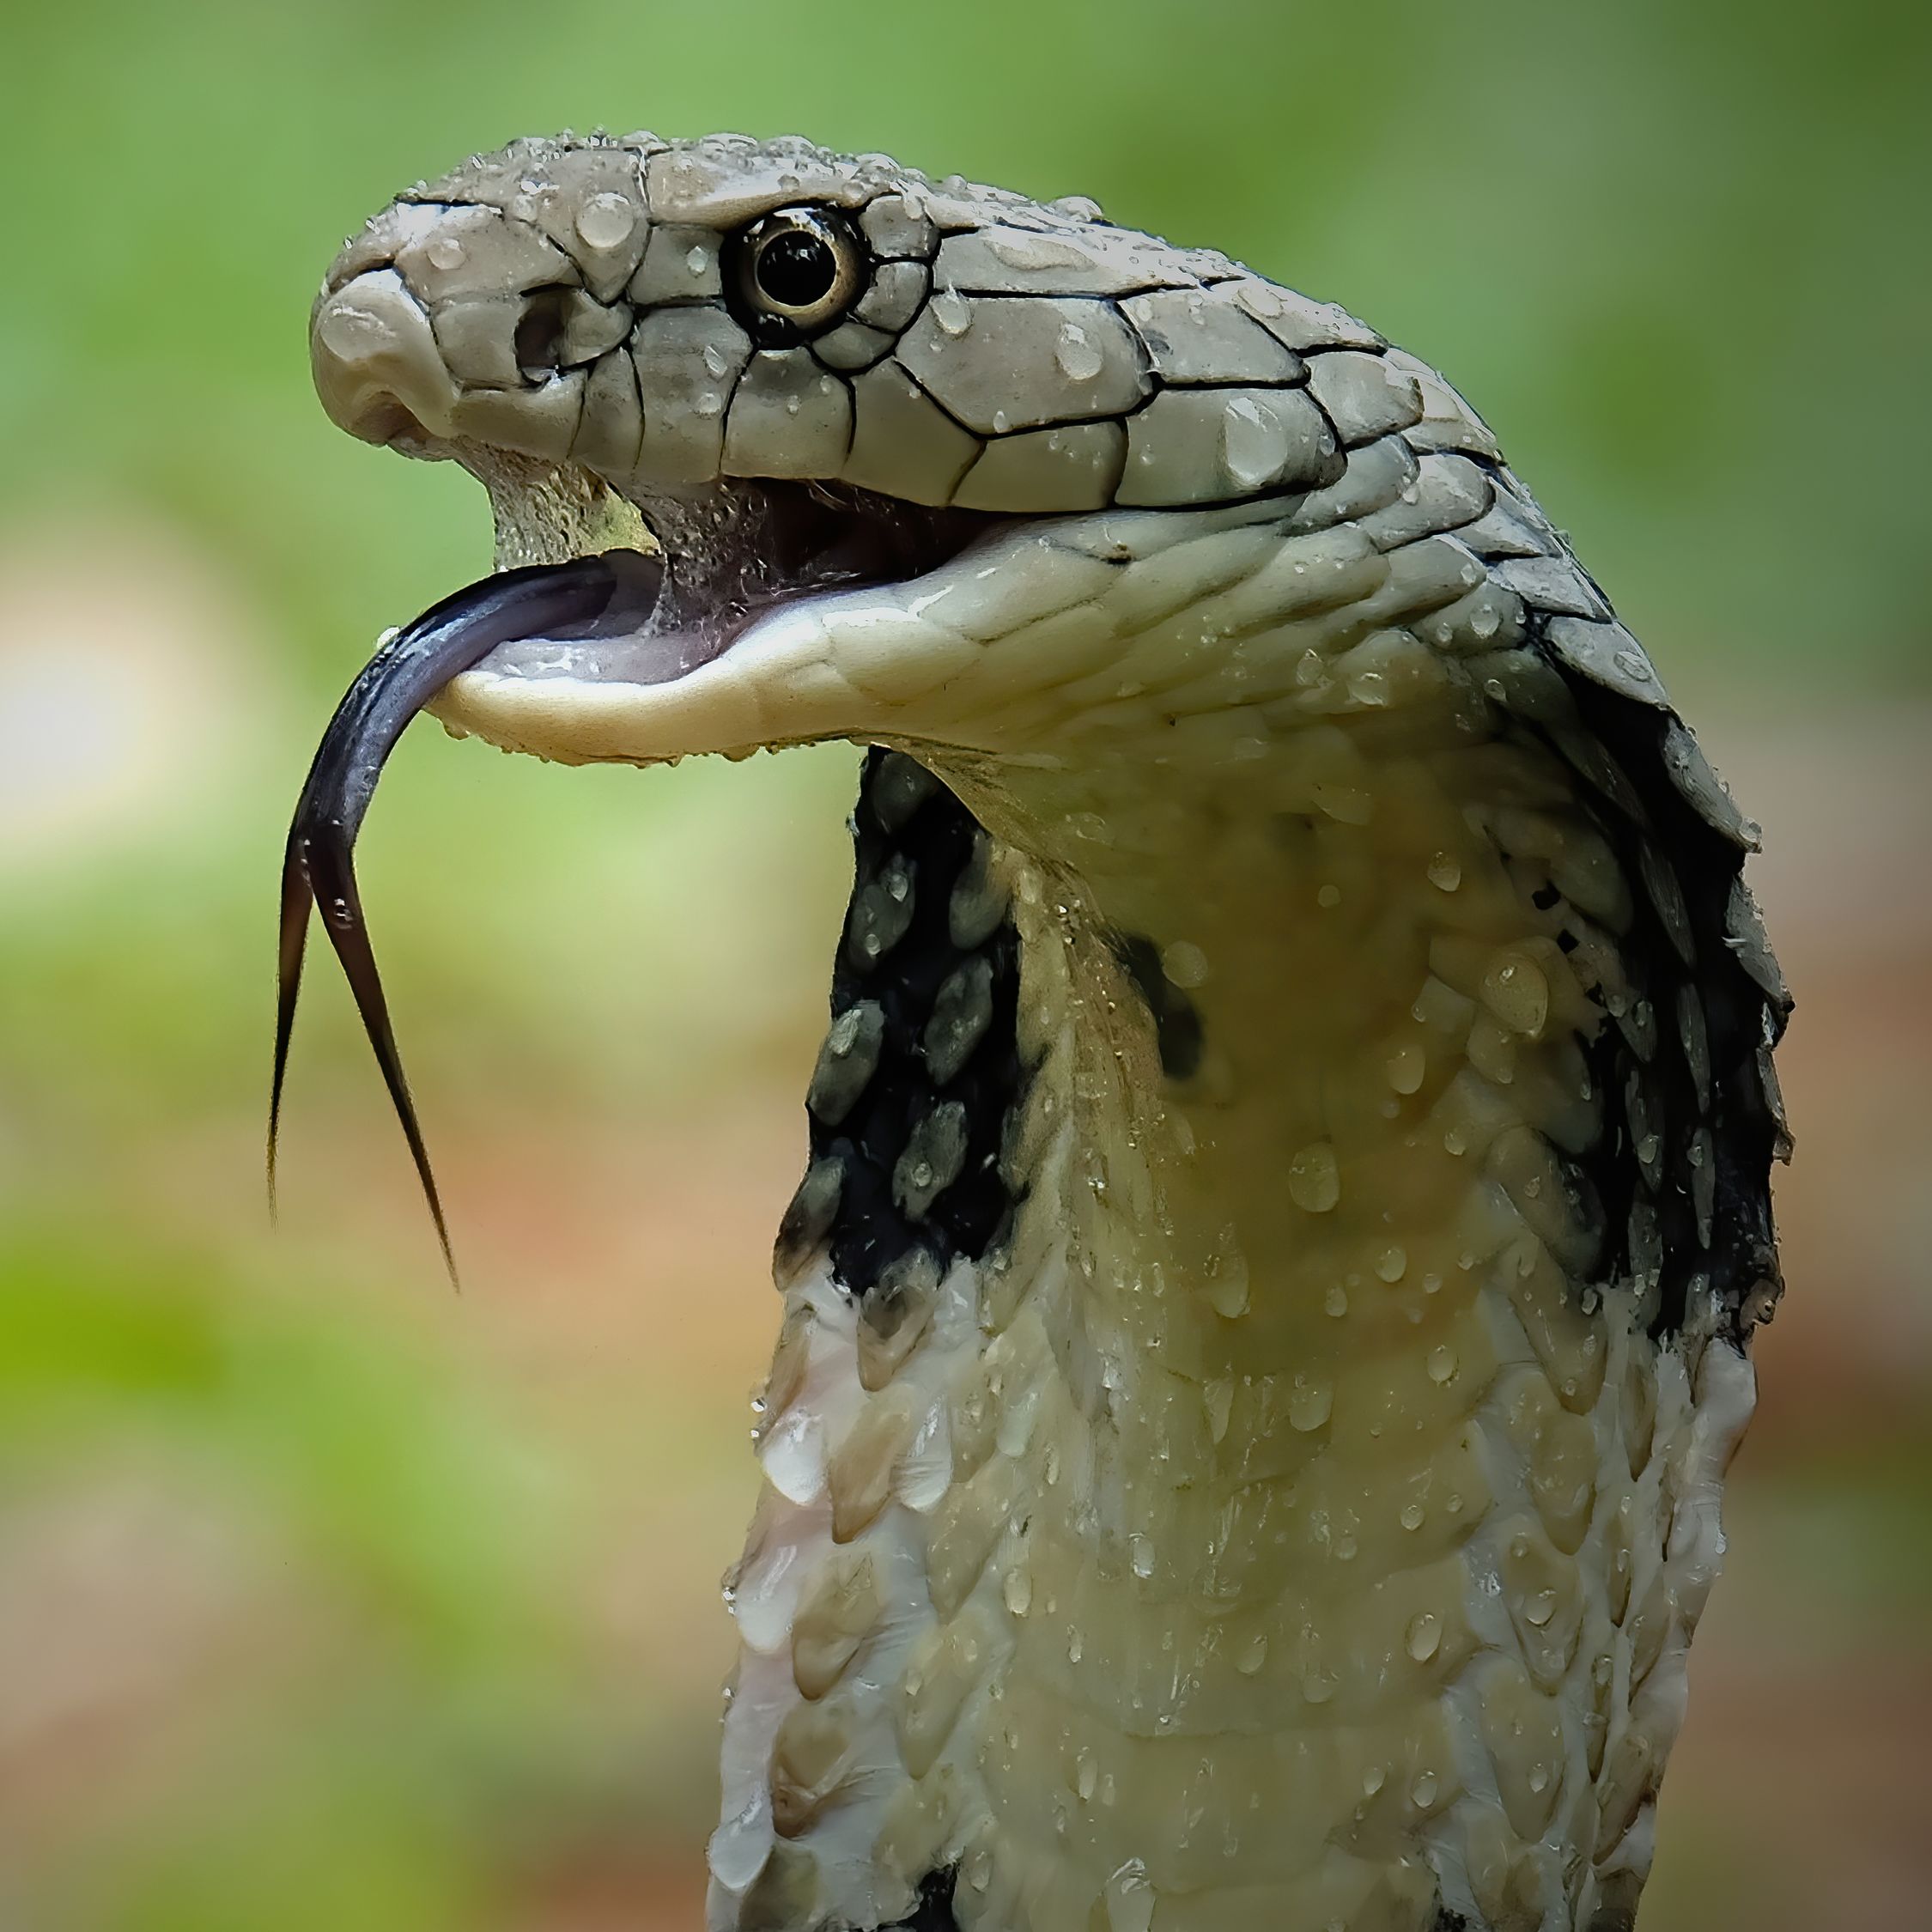 How to Kill a King Cobra Snake?